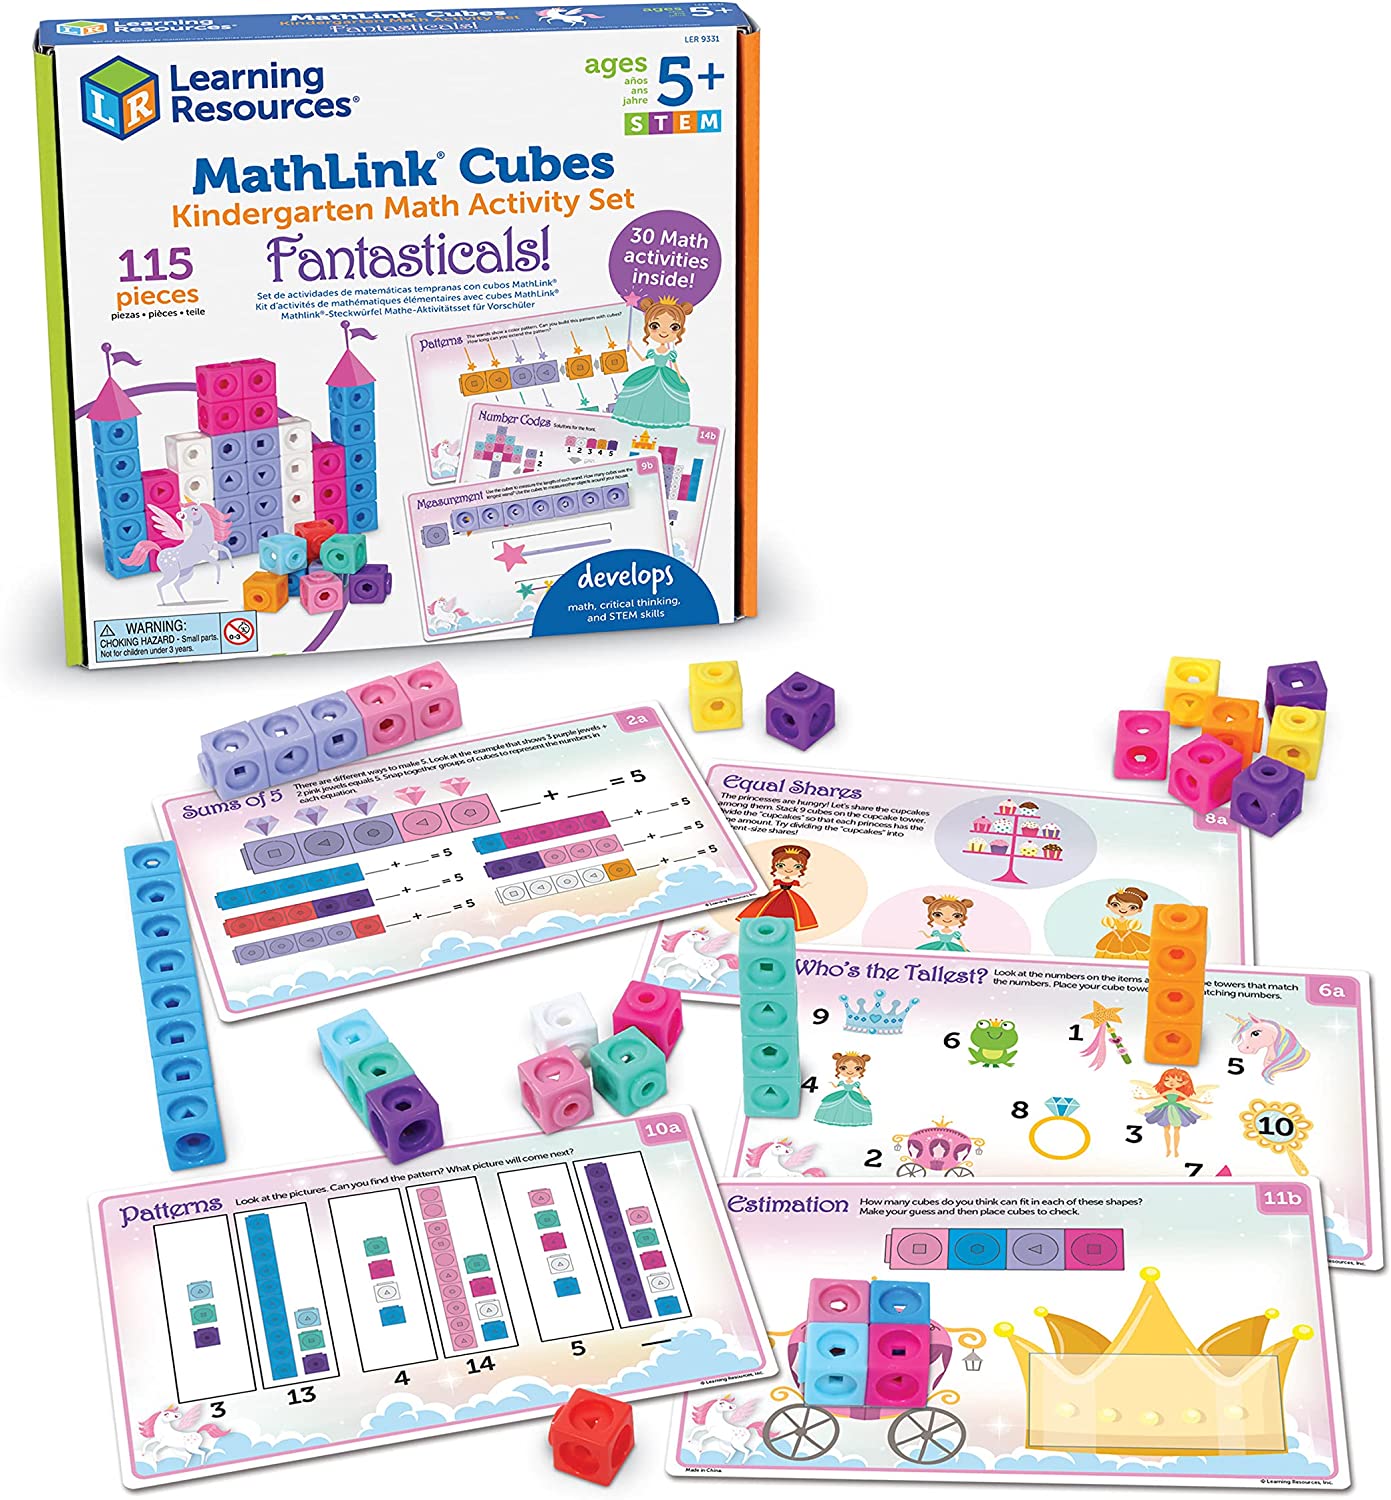 Learning Resources LER9331 Kindergarten Math Activity Set: Fantasticals! 115pieces for Ages 5+